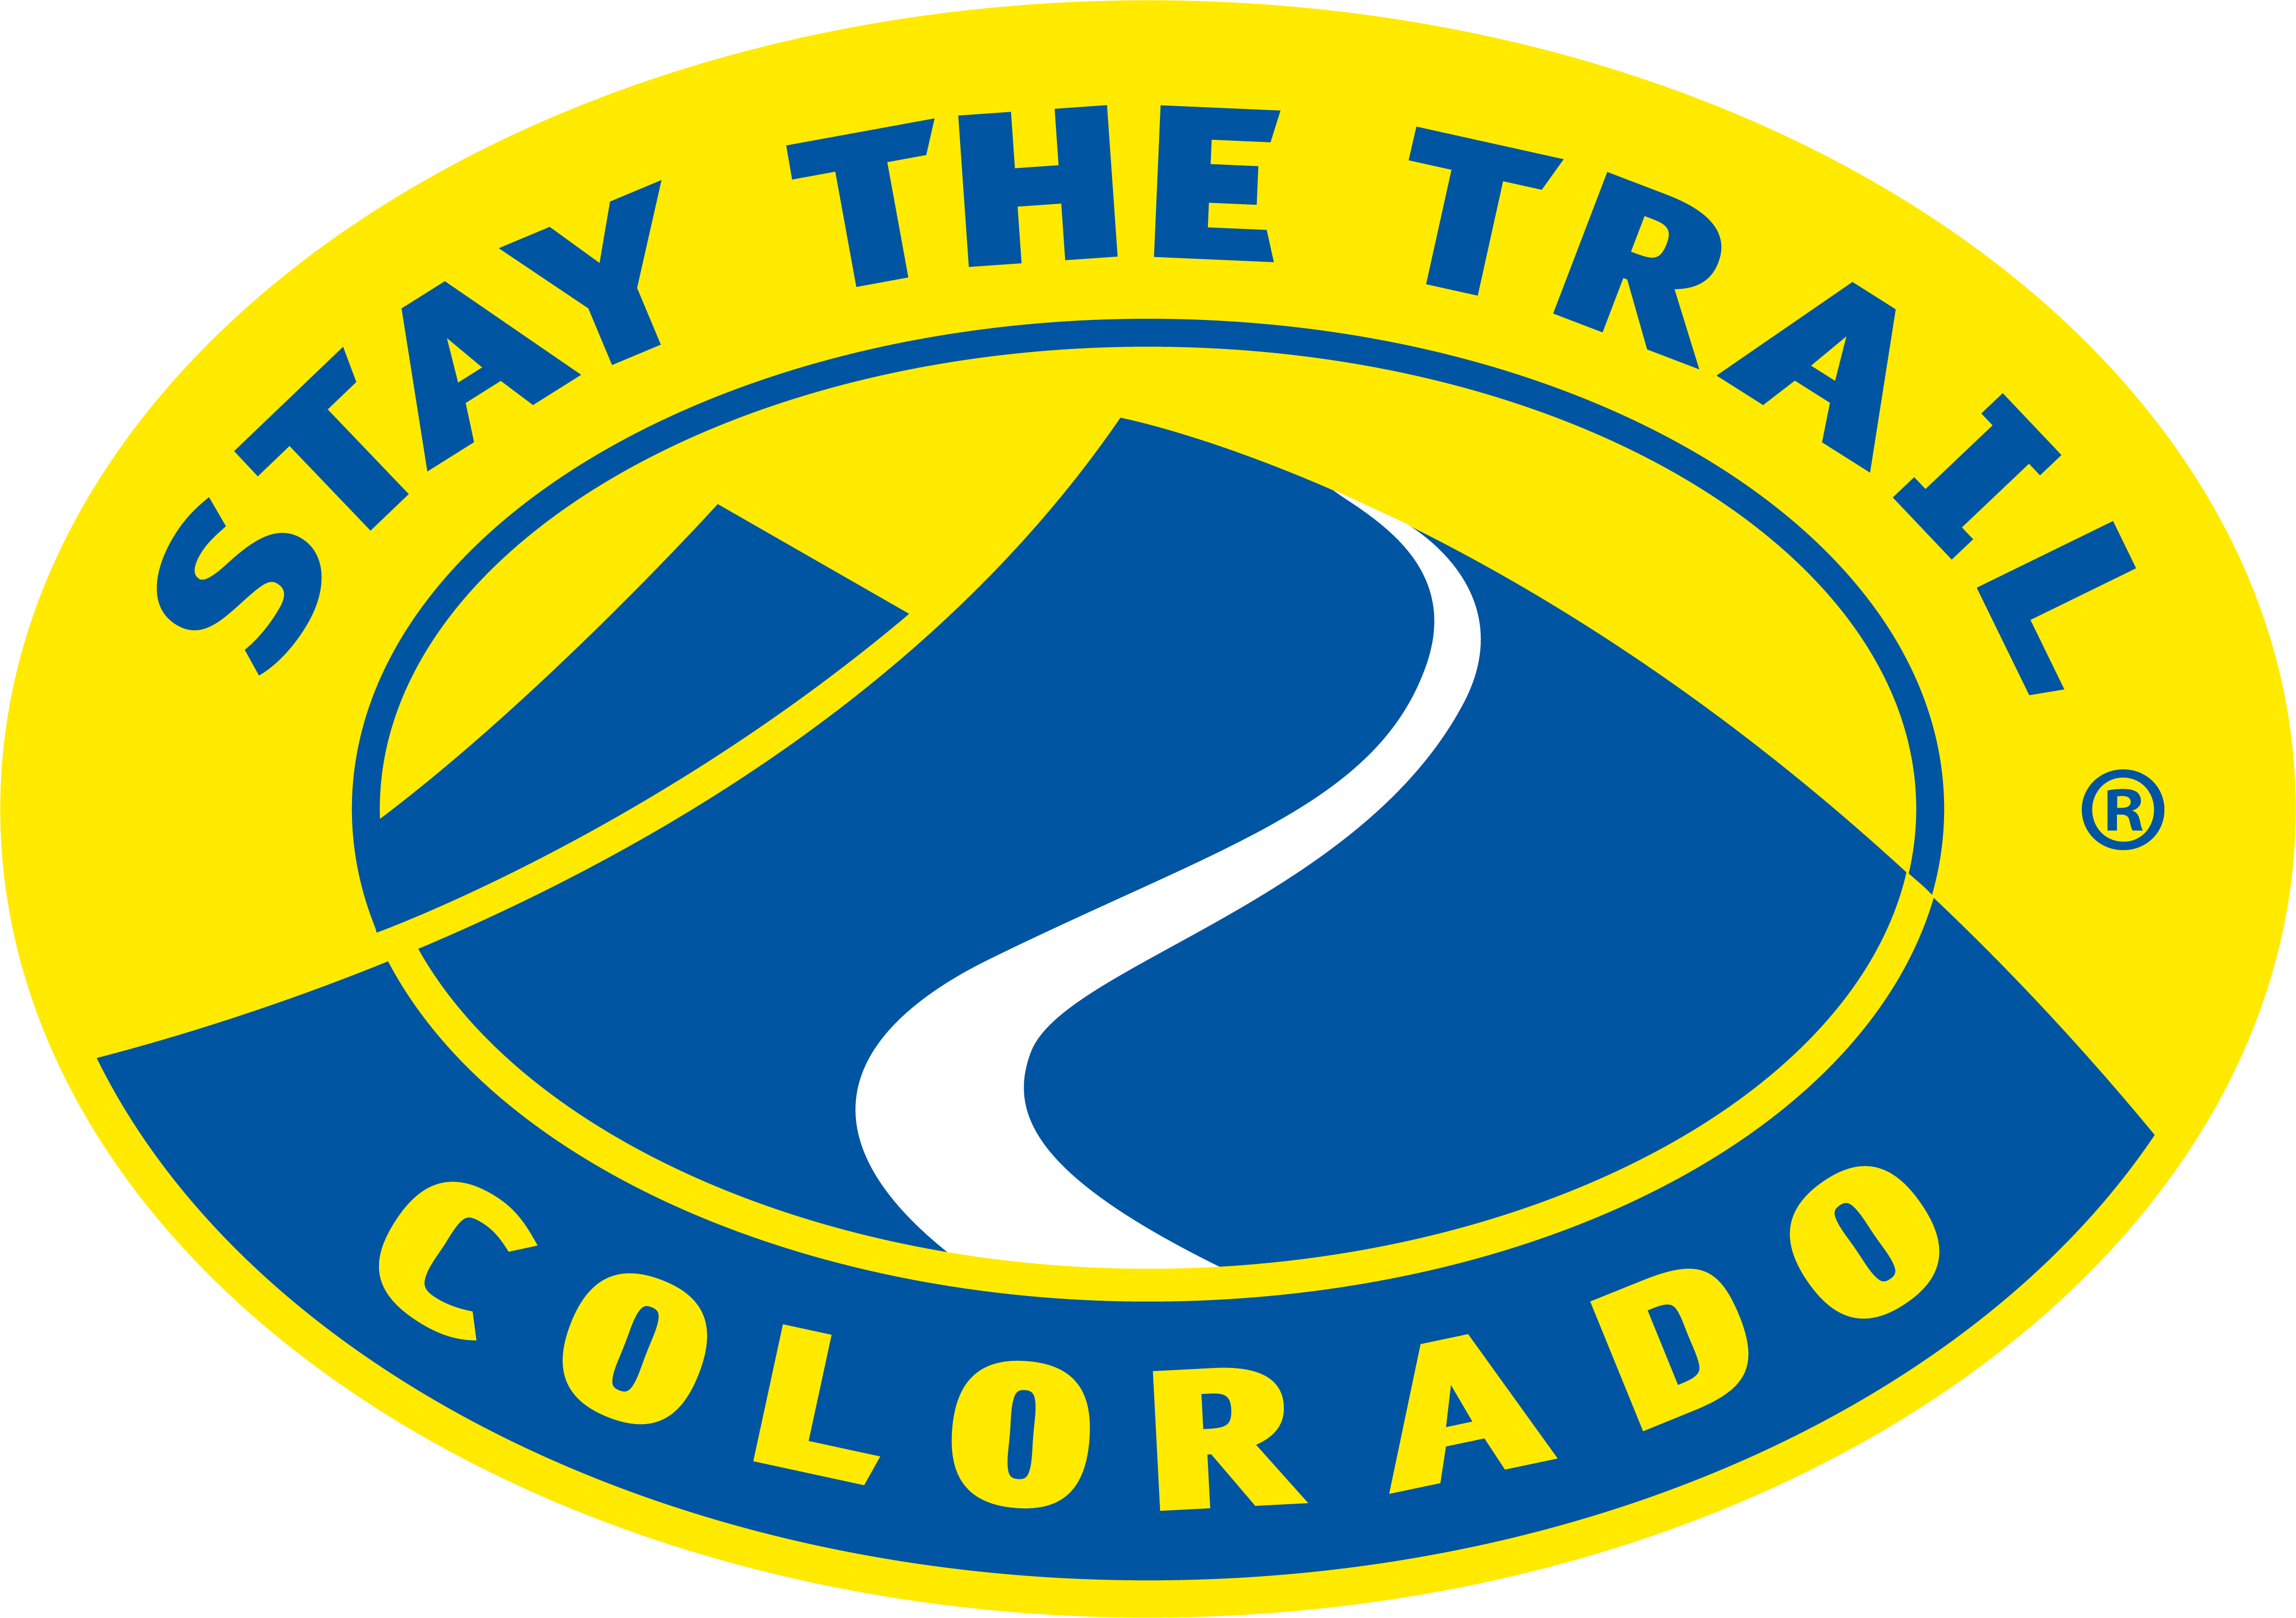 Stay the Trail (STT) Colorado